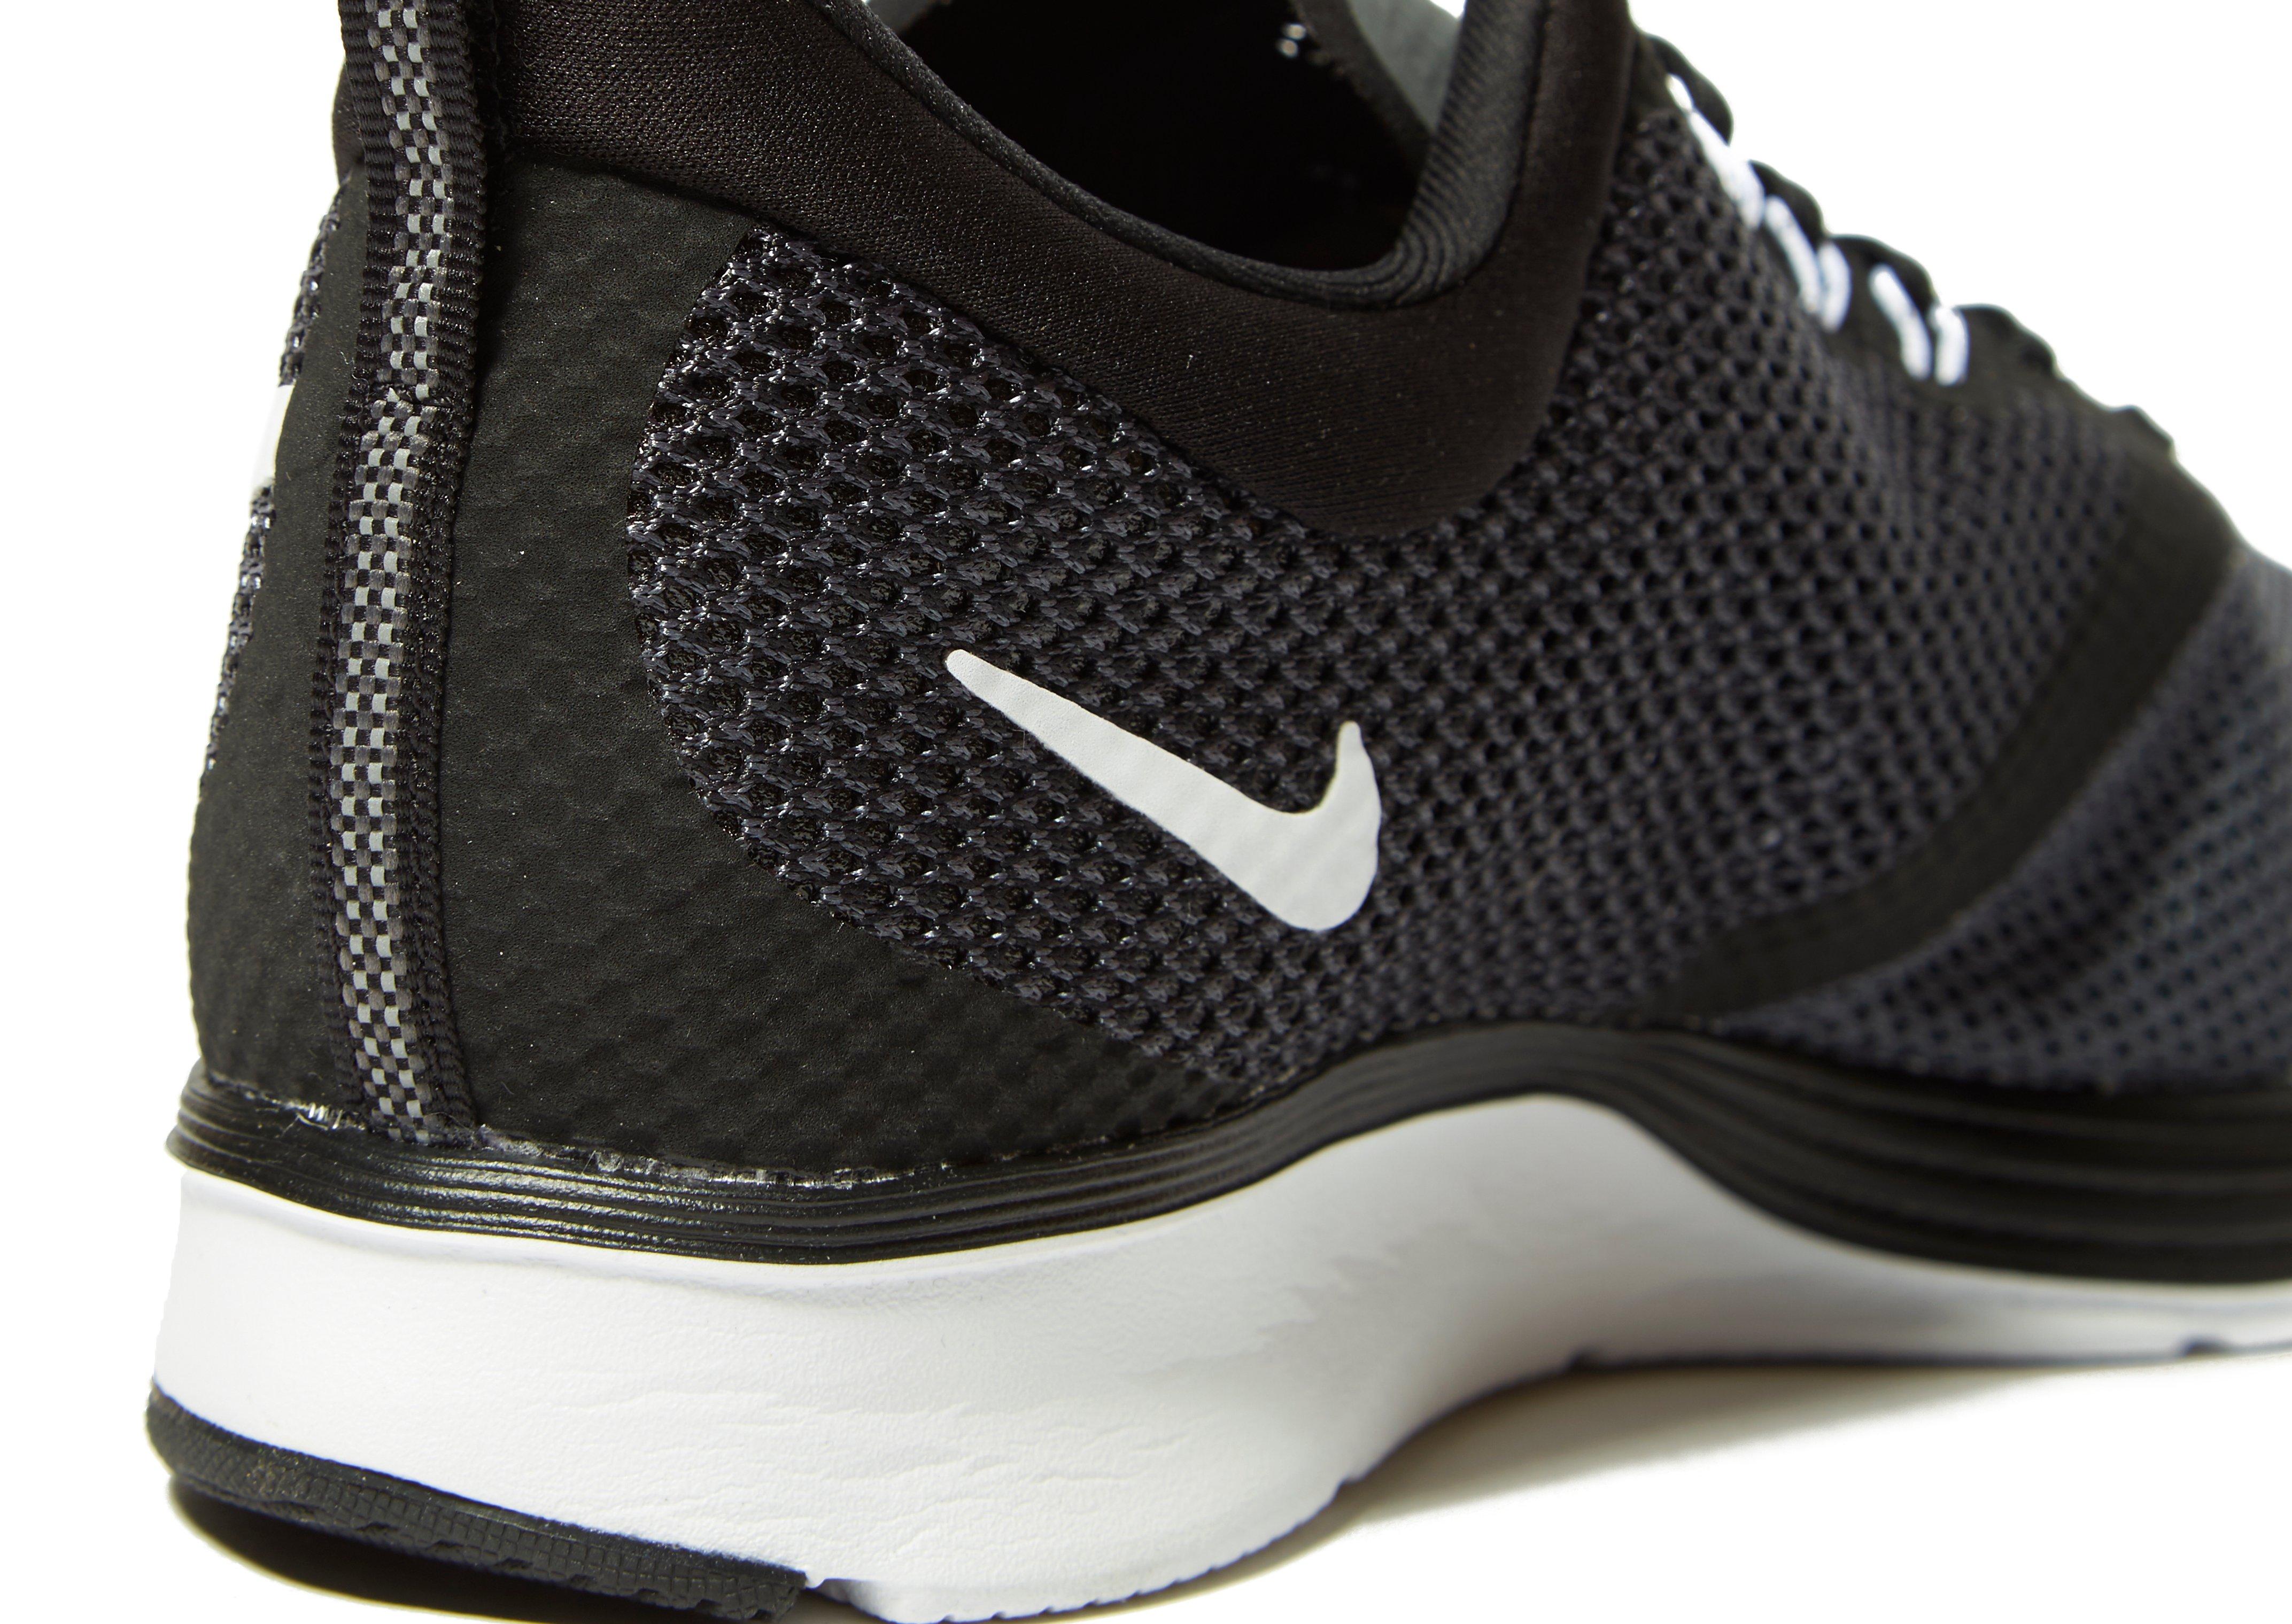 Nike Online Claim Black White Shoes | INEE